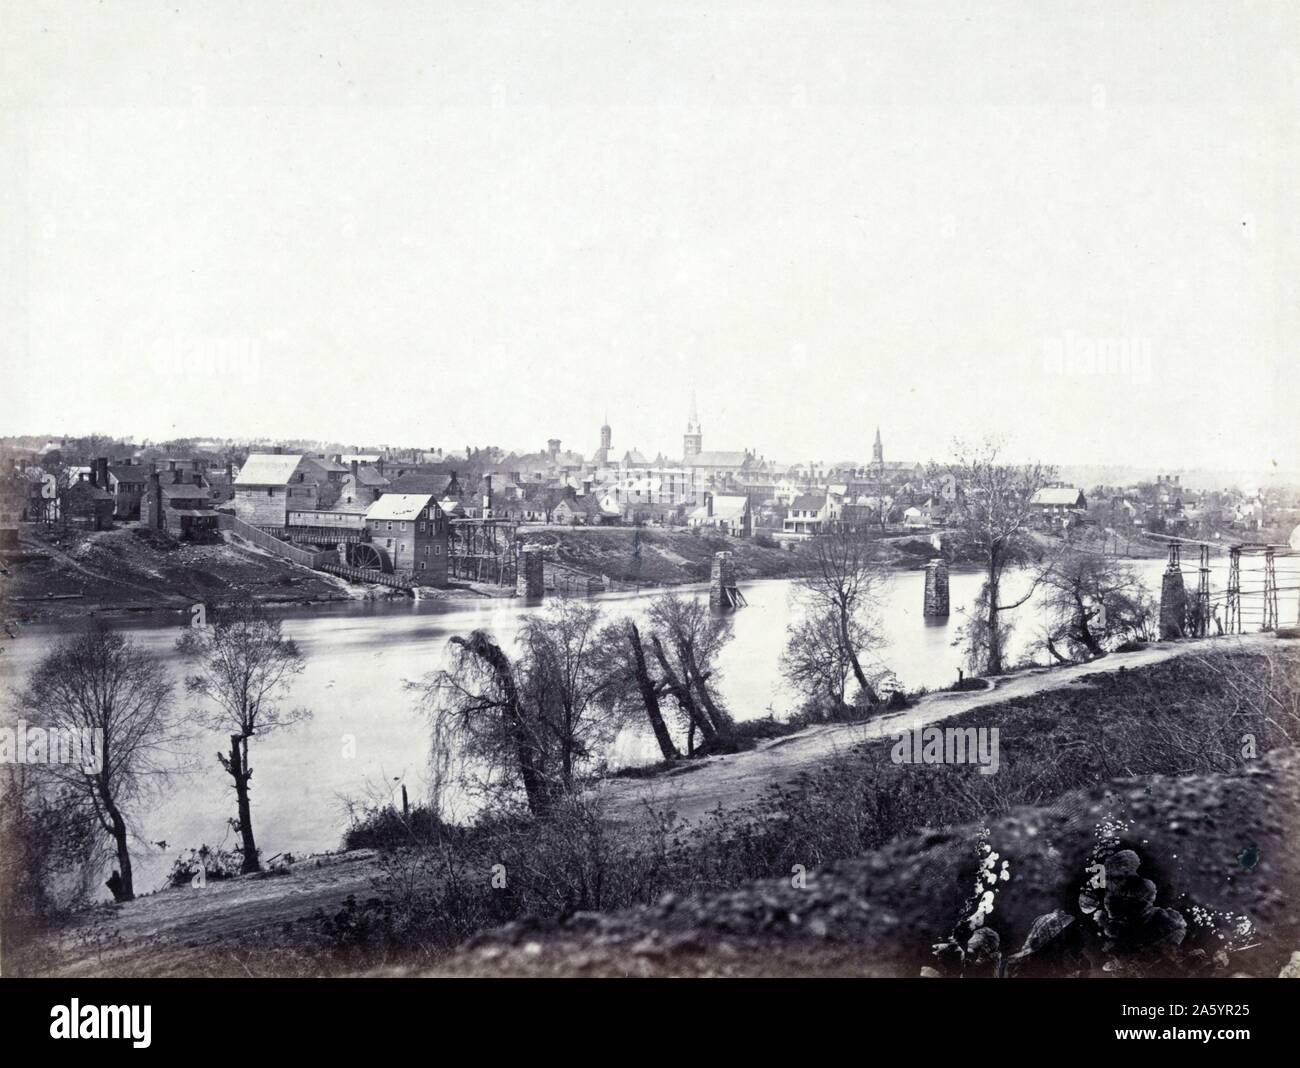 The town of Fredericksburg, Virginia just before the American Civil War, Battle of Fredericksburg, 1862. Stock Photo